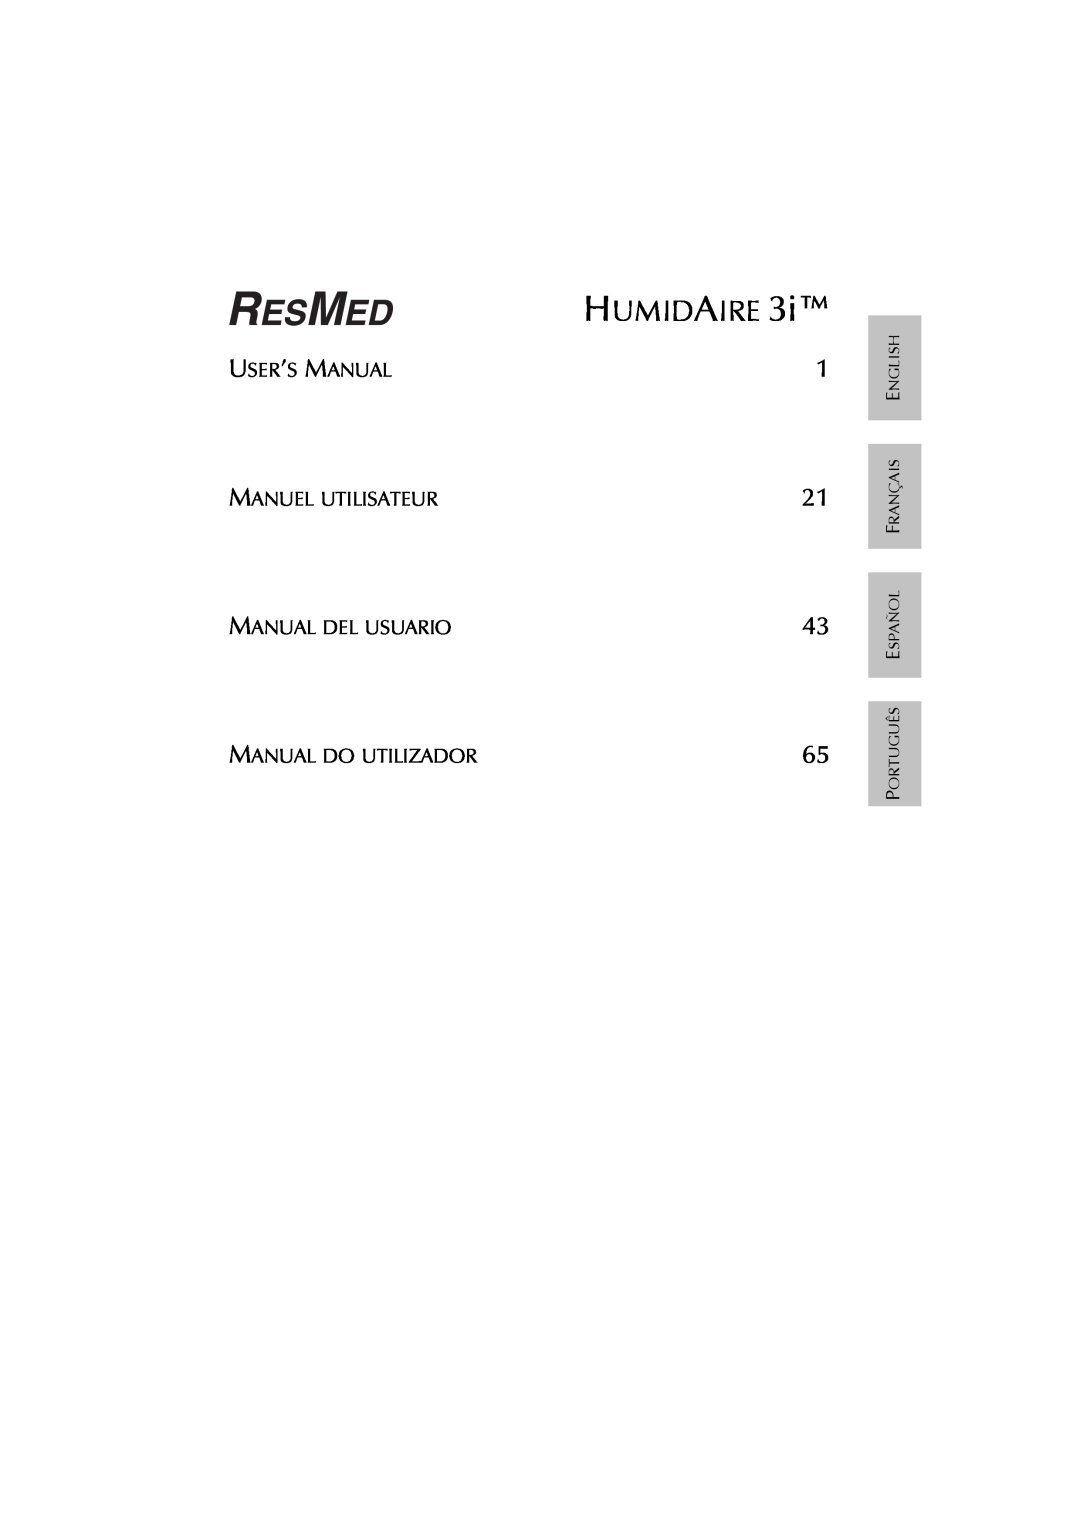 ResMed 3I user manual Humidaire, Manuel Utilisateur, Manual Del Usuario, Manual Do Utilizador 